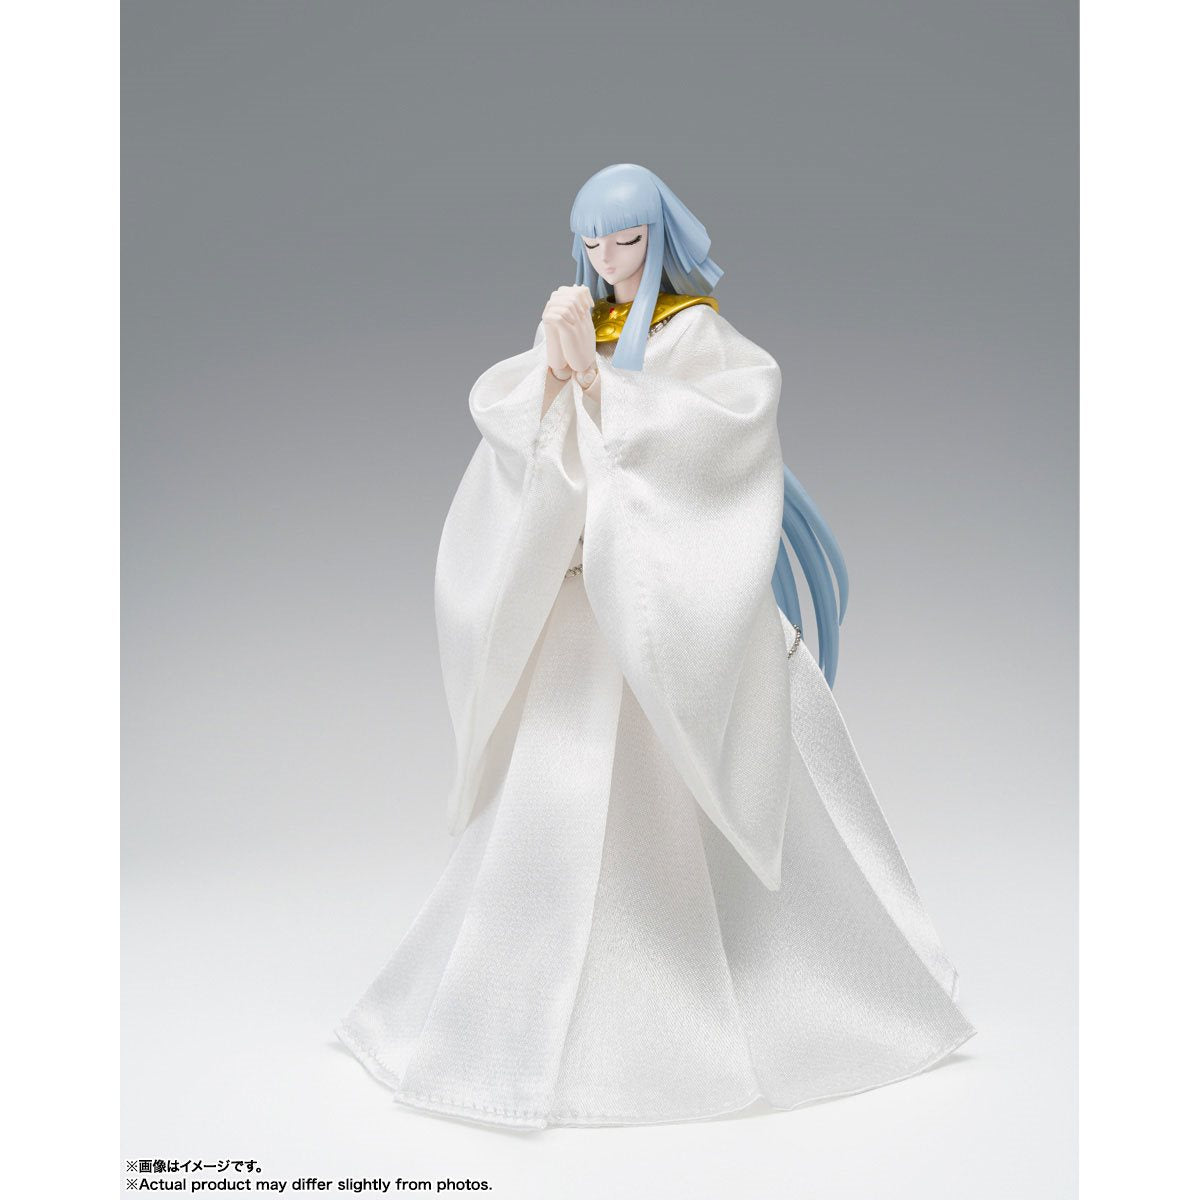 Bandai Tamashi Nations Myth Cloth EX: Saint Seiya Saga de Asgard - Hilda de Polaris Figura de Acci√≥n